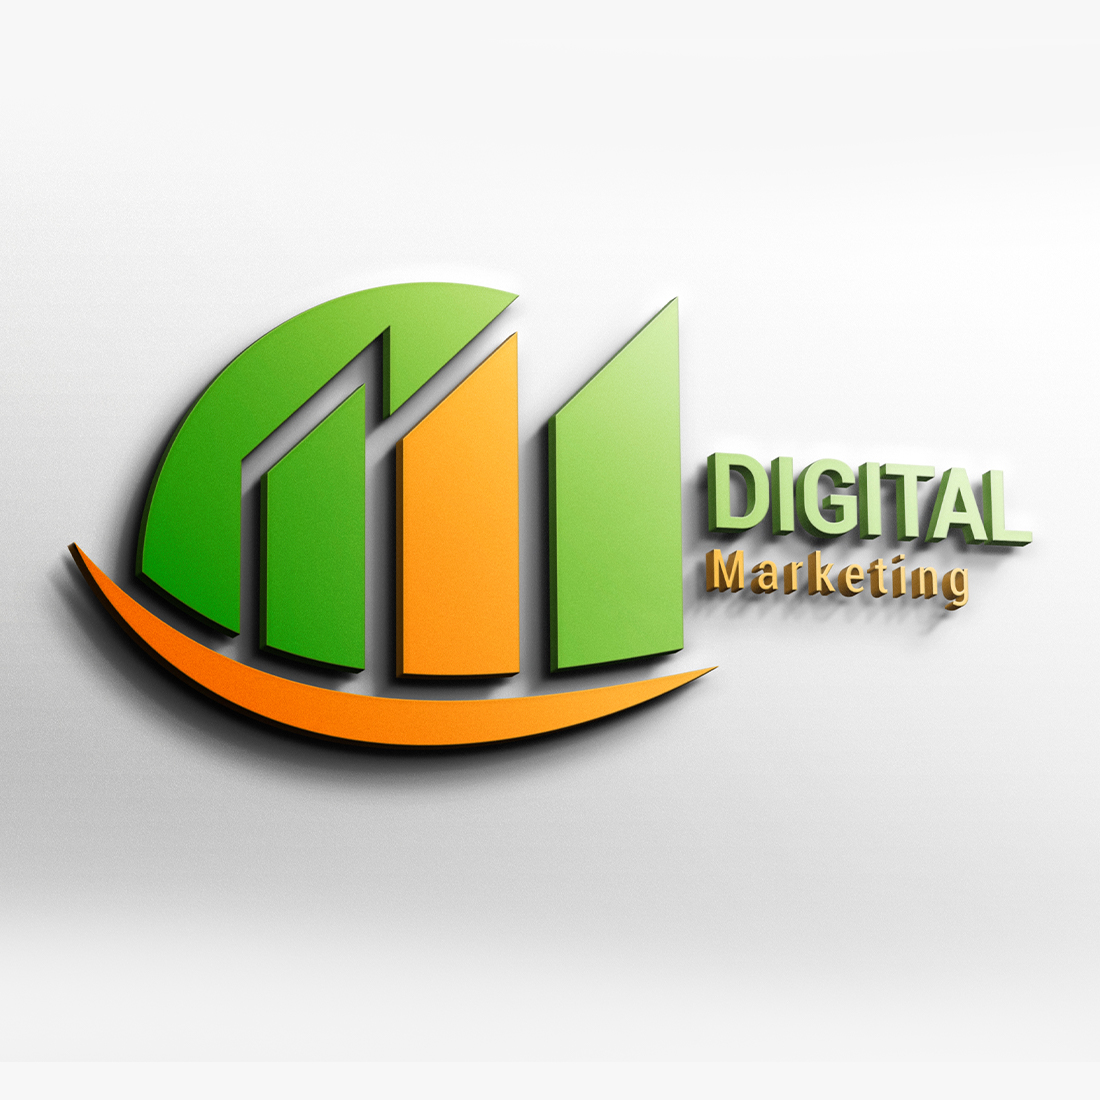 Digital marketing logo design ( txt is easily editable ) cover image.